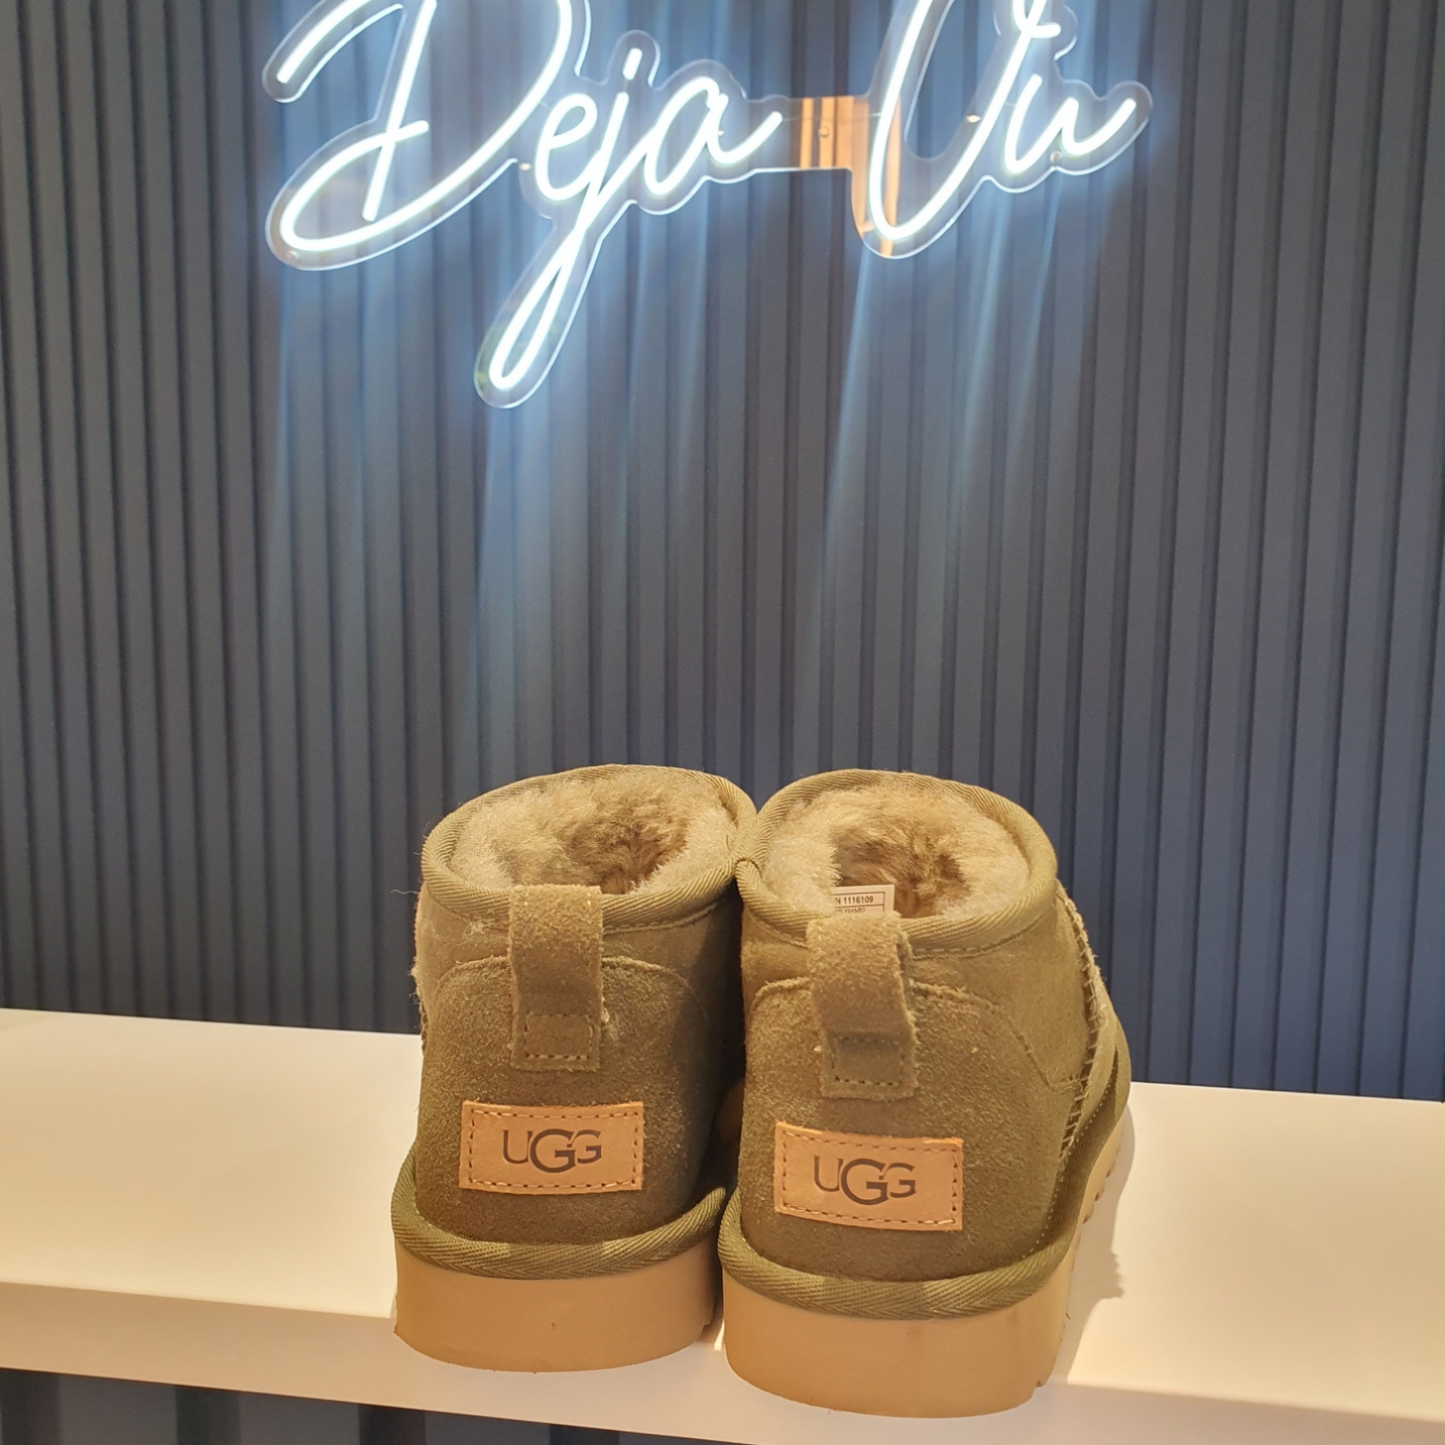 UGG ultra mini boots, Olive green, BNWT